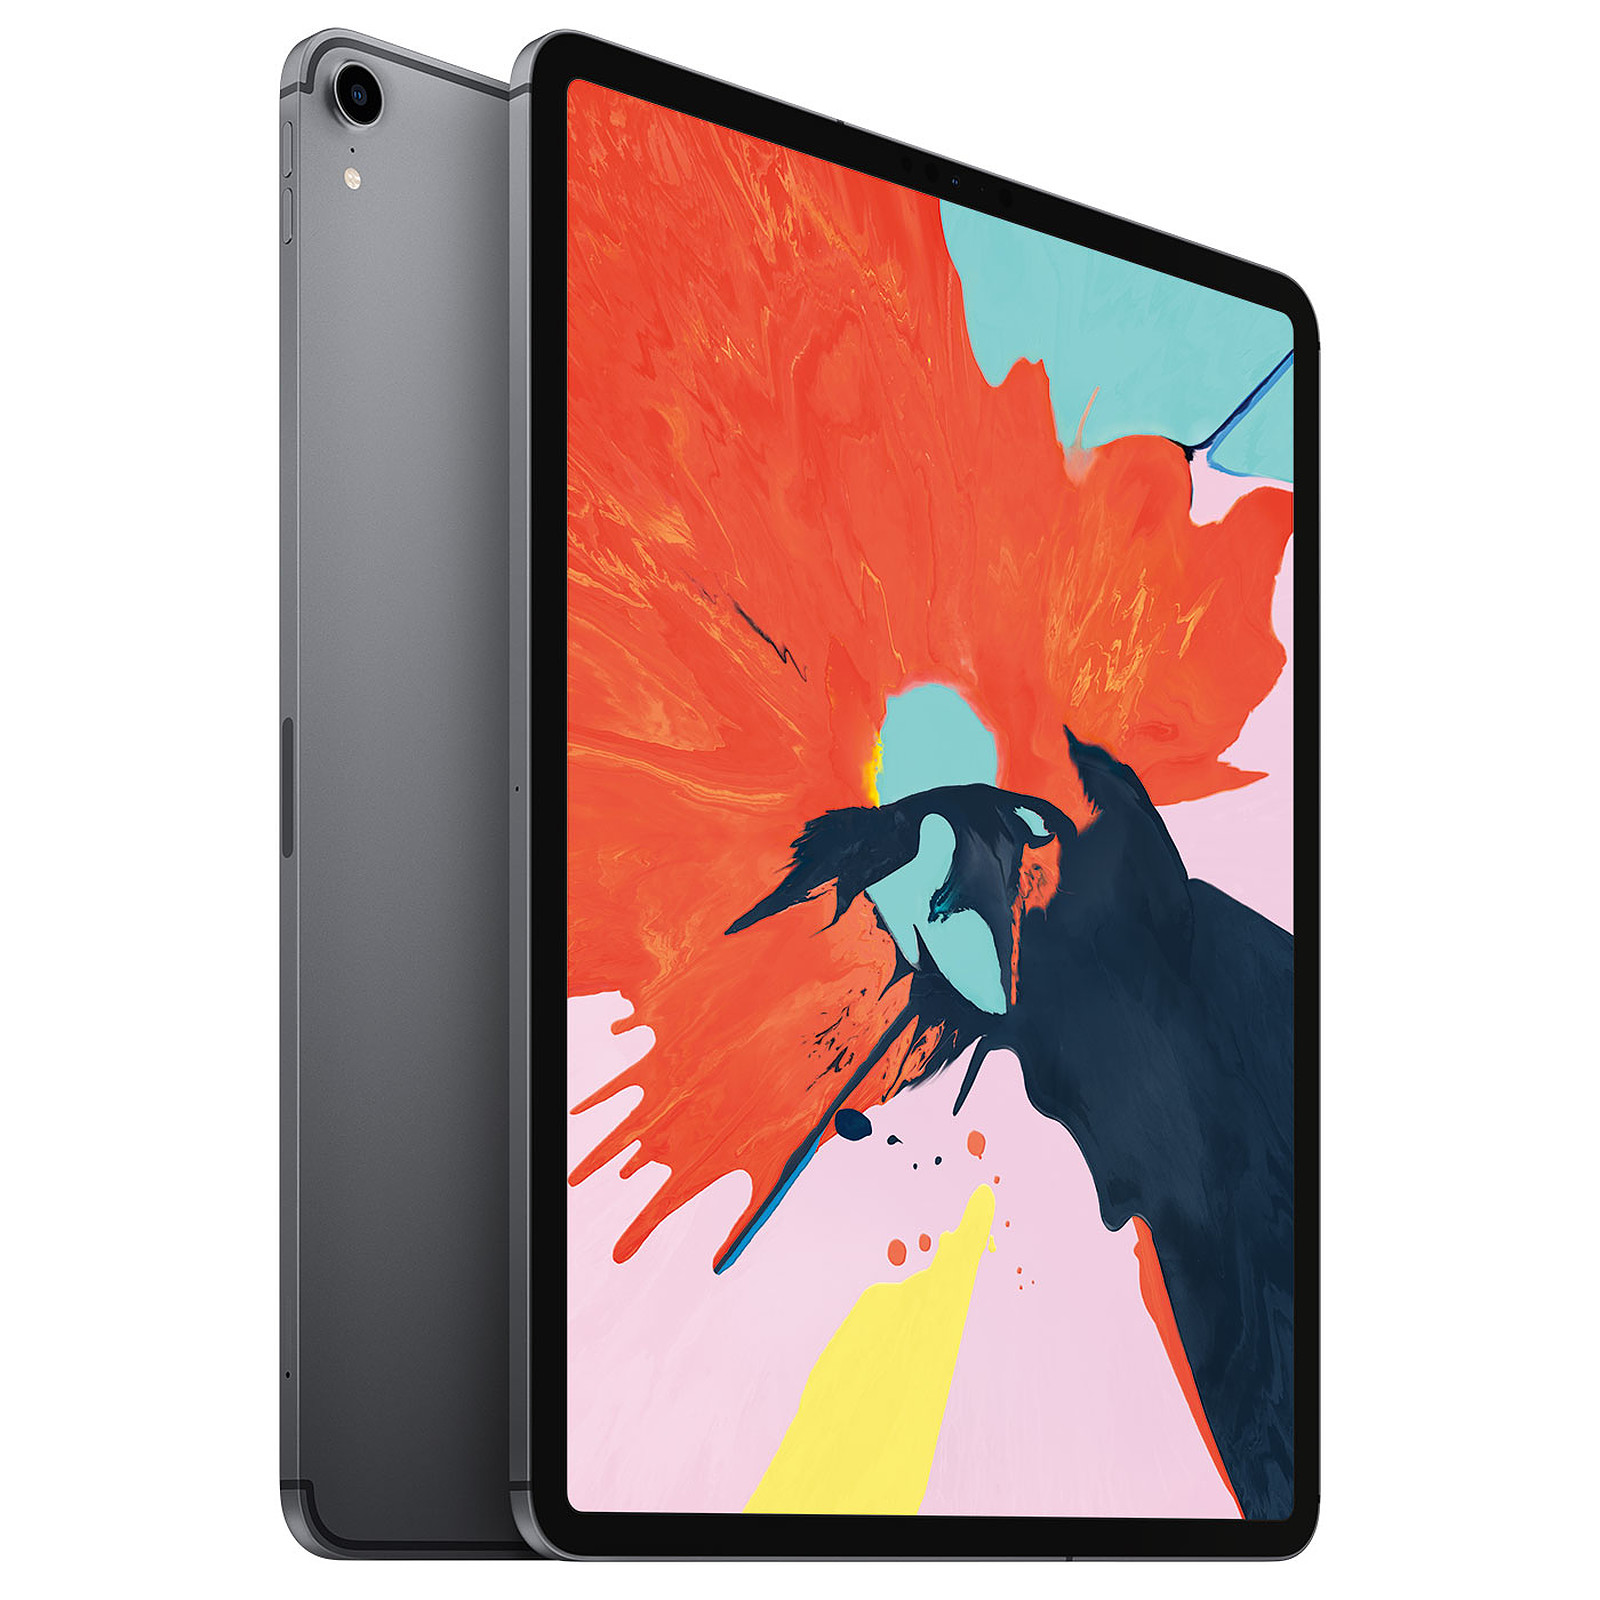 Apple iPad Pro (2018) 12.9 pouces 256 Go Wi-Fi + Cellular Gris Sideral · Reconditionne - Tablette tactile Apple